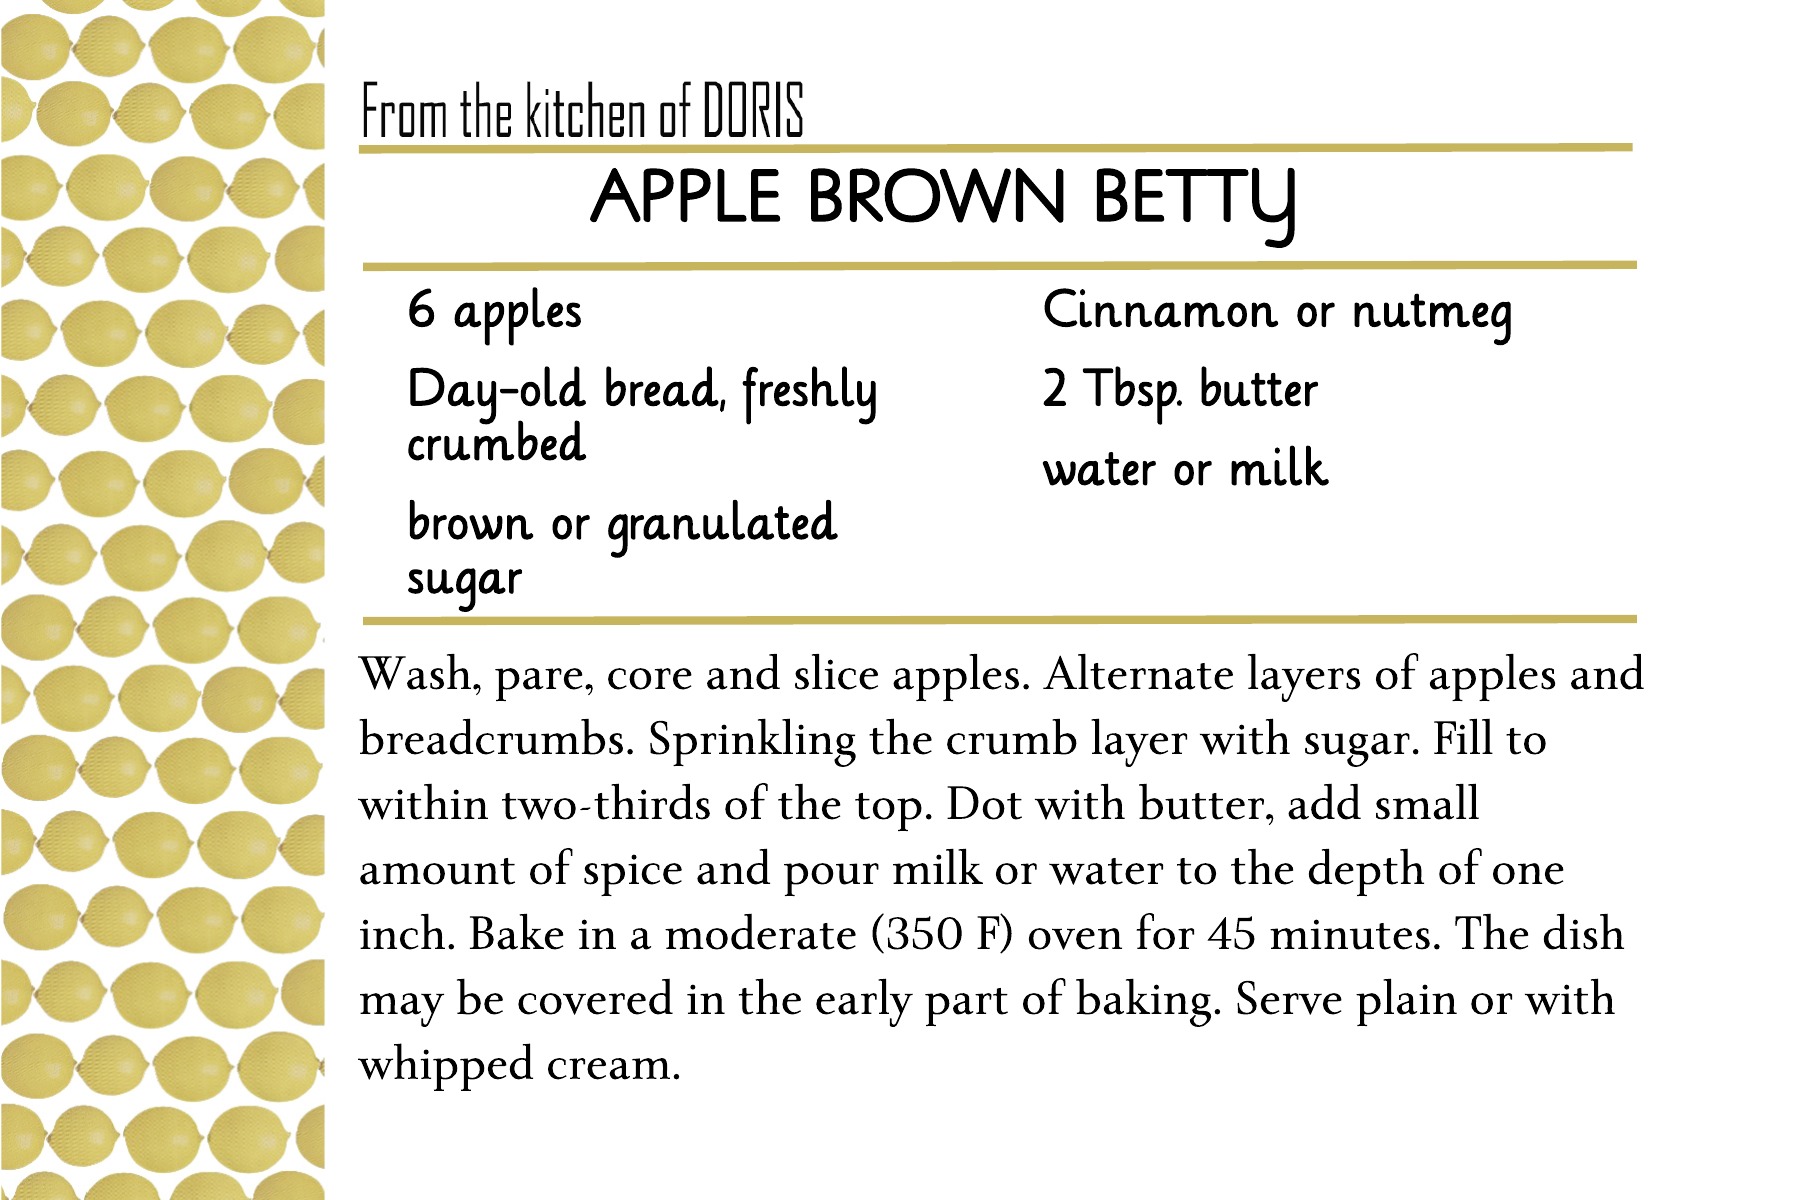 Apple Brown Betty.jpg